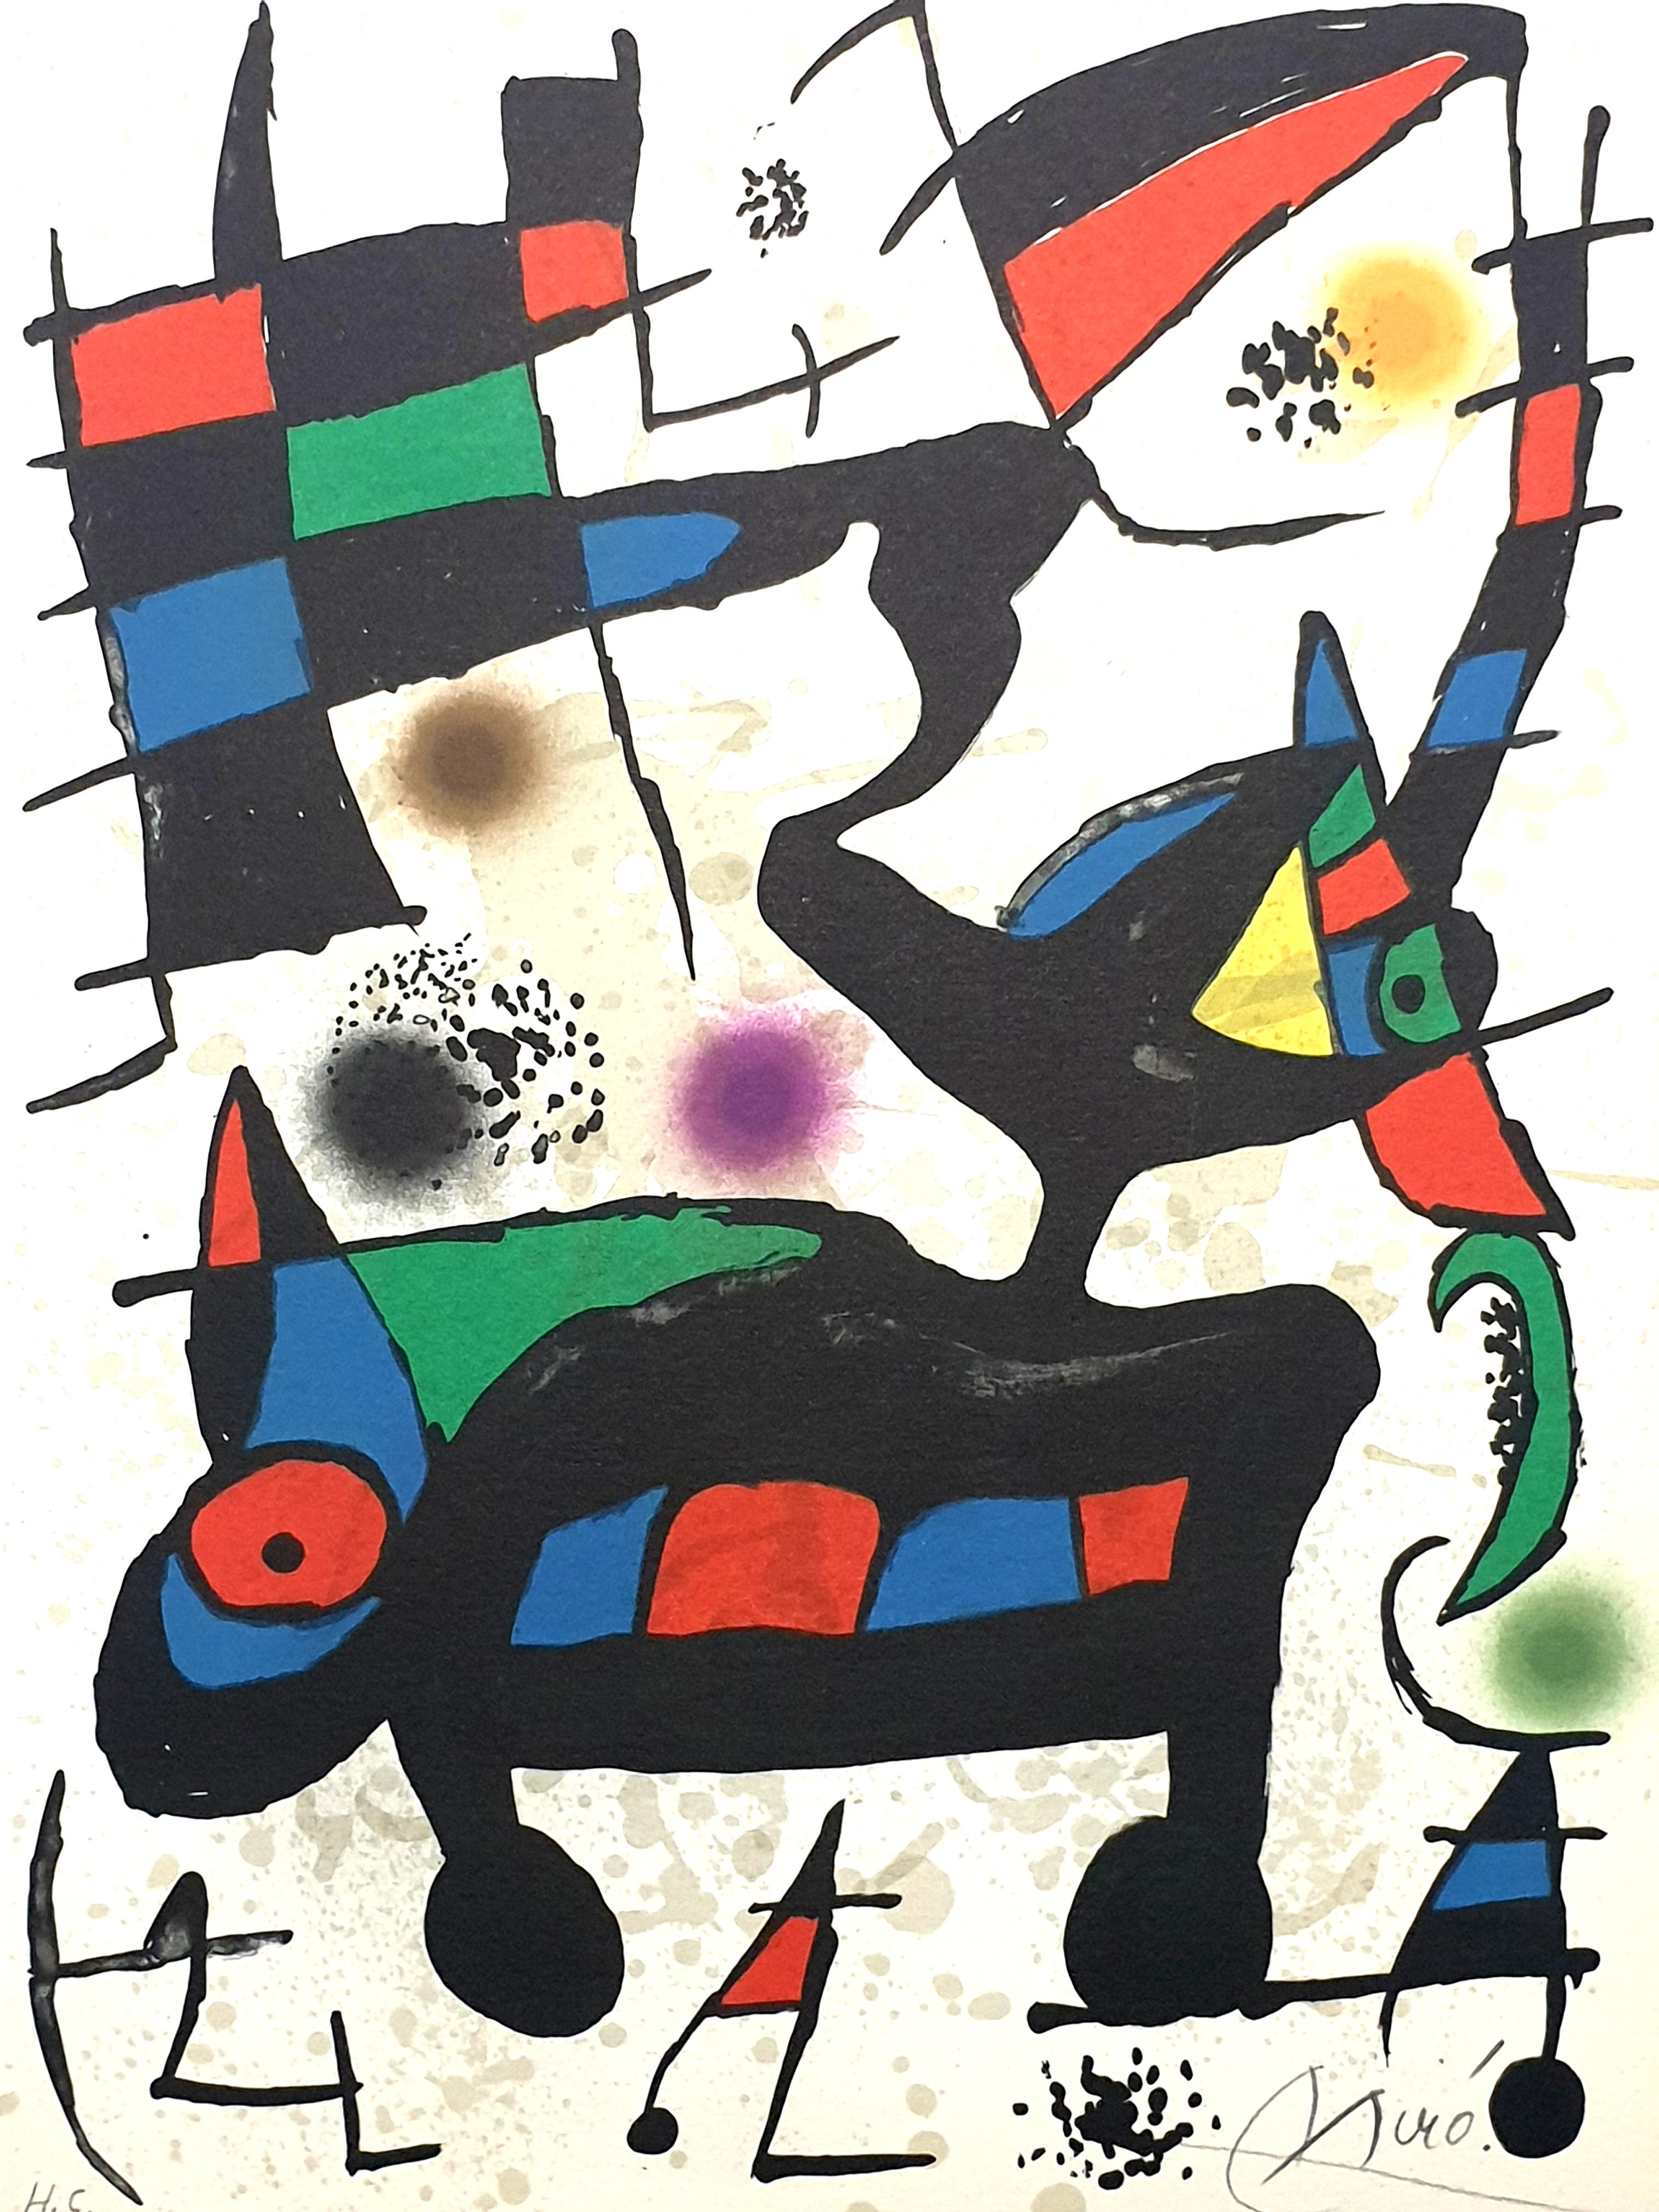 Joan Miro - “Plate I” from “Oda à Joan Miró” - Lithograph